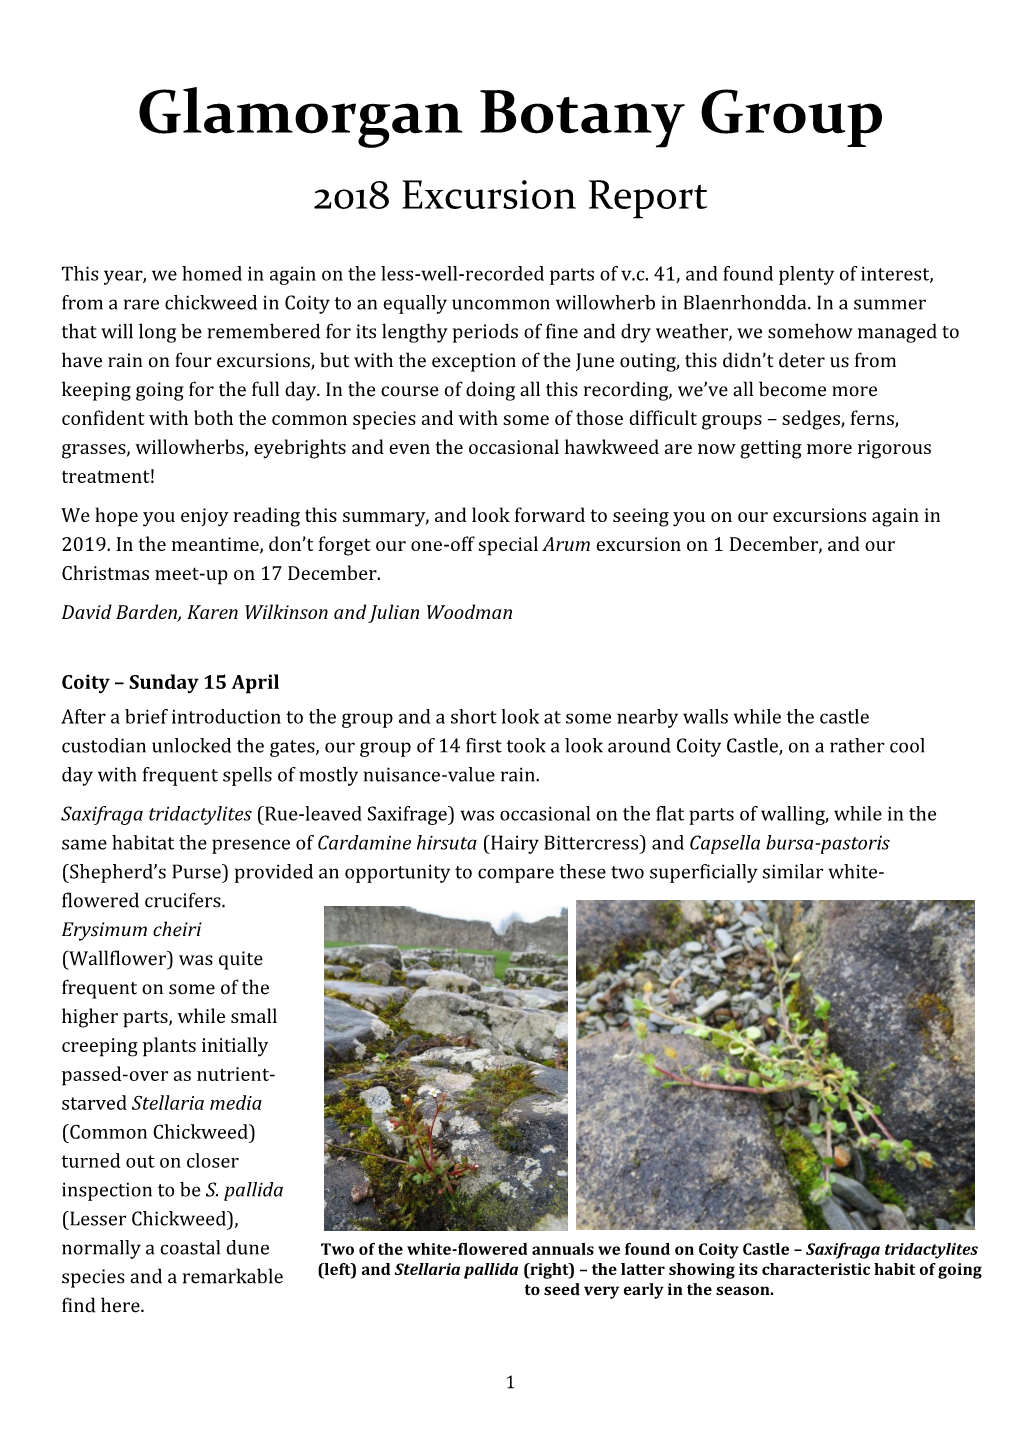 Glamorgan Botany Group 2018 Excursion Report